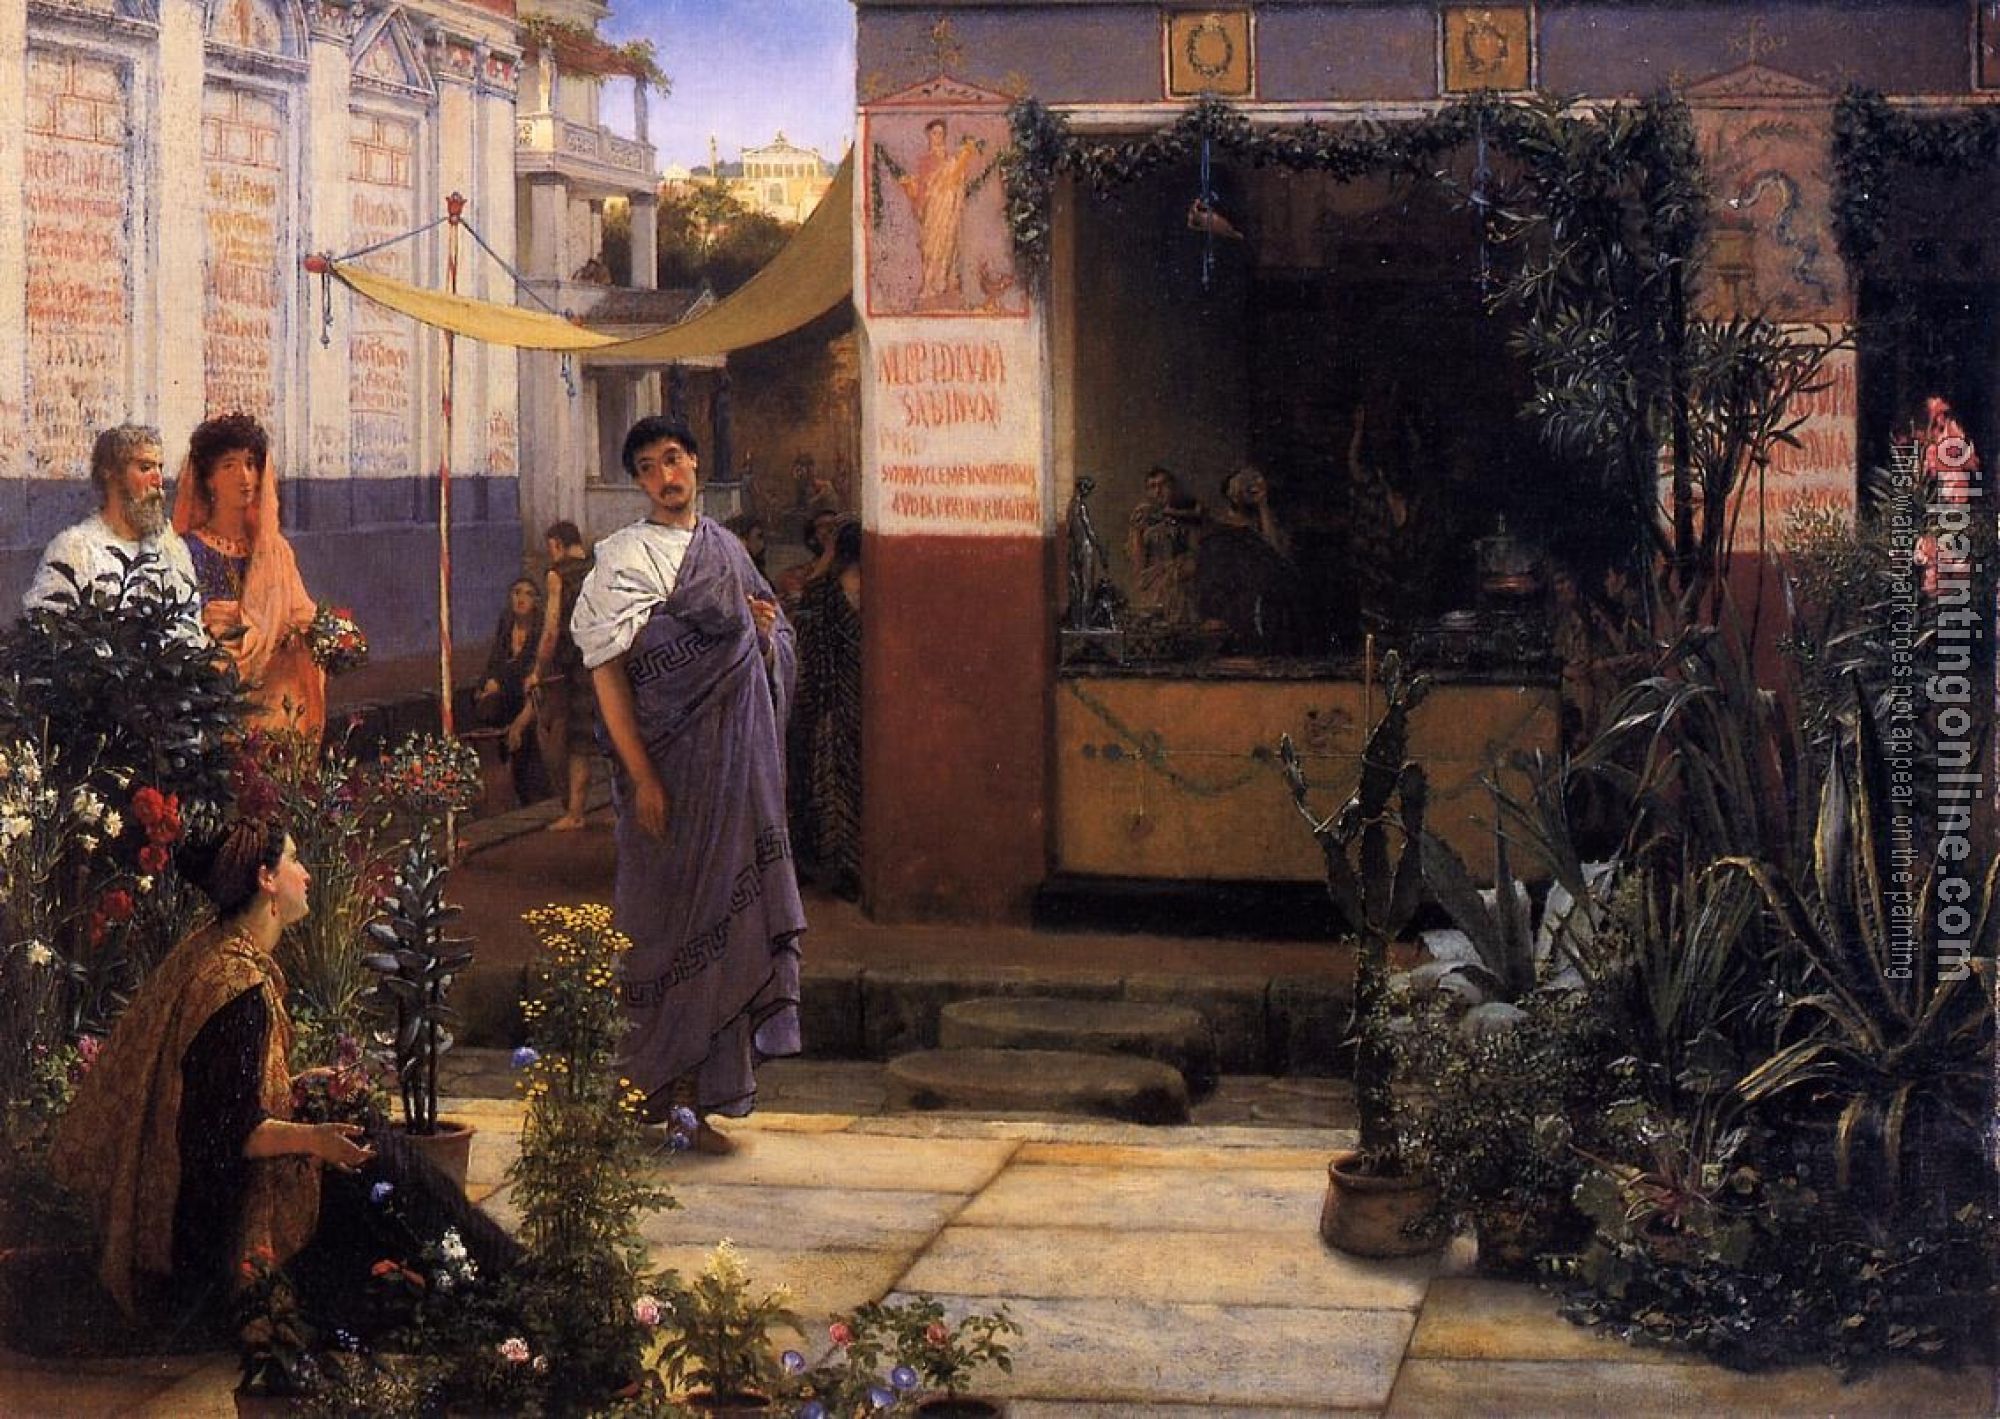 Alma-Tadema, Sir Lawrence - The Flower Market